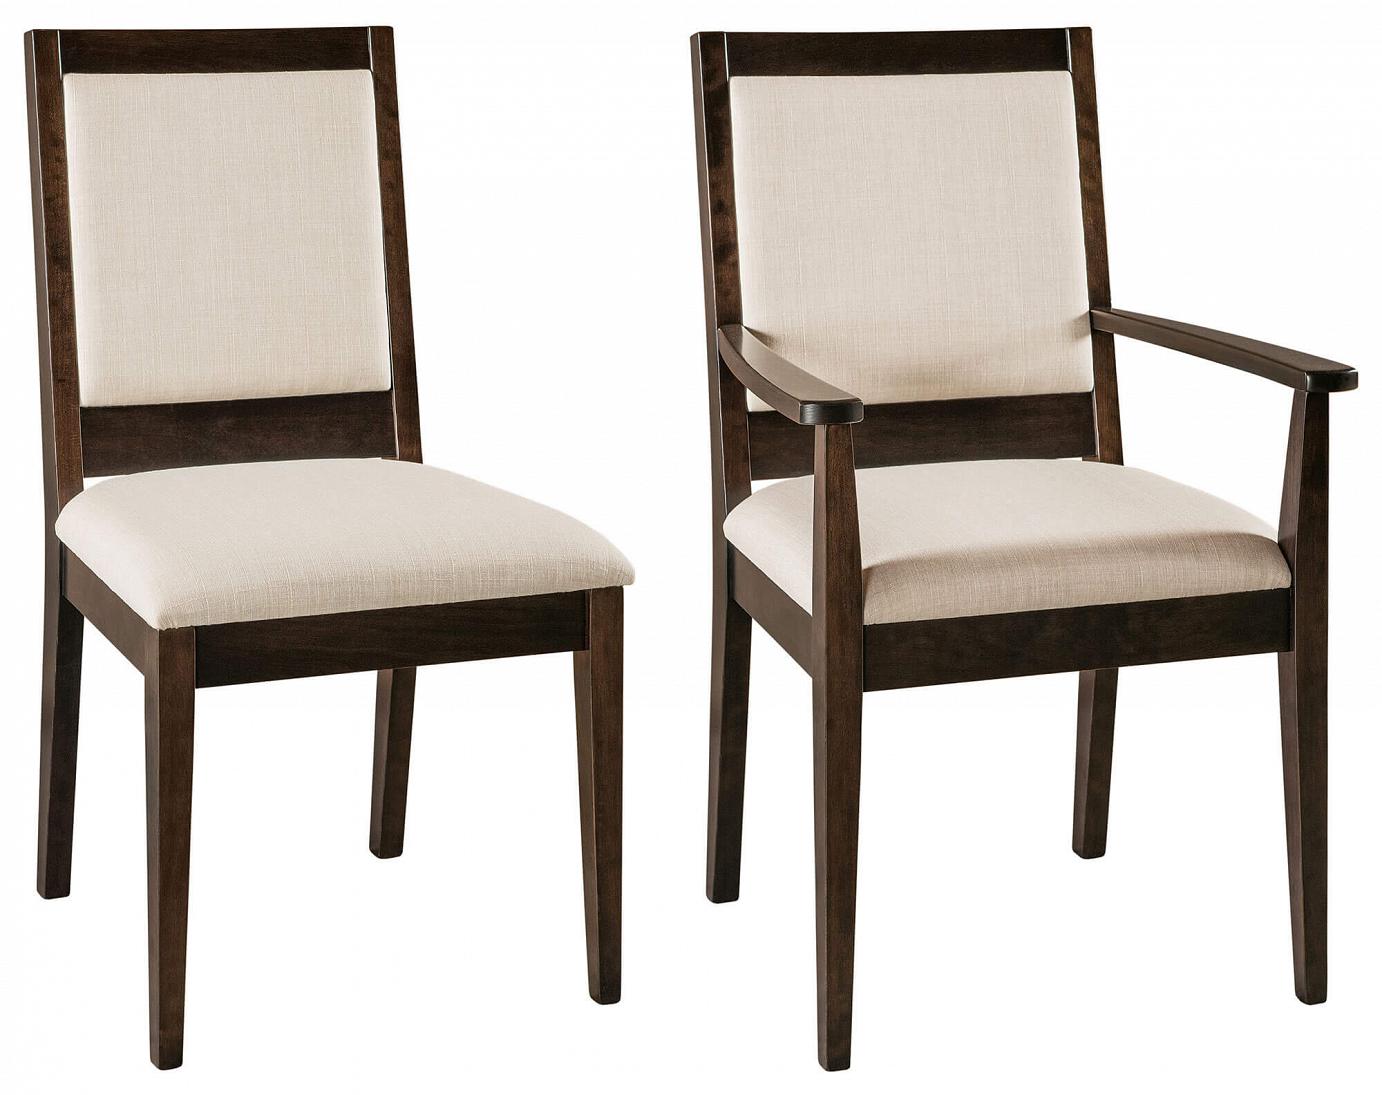 RH Yoder Wescott Chairs